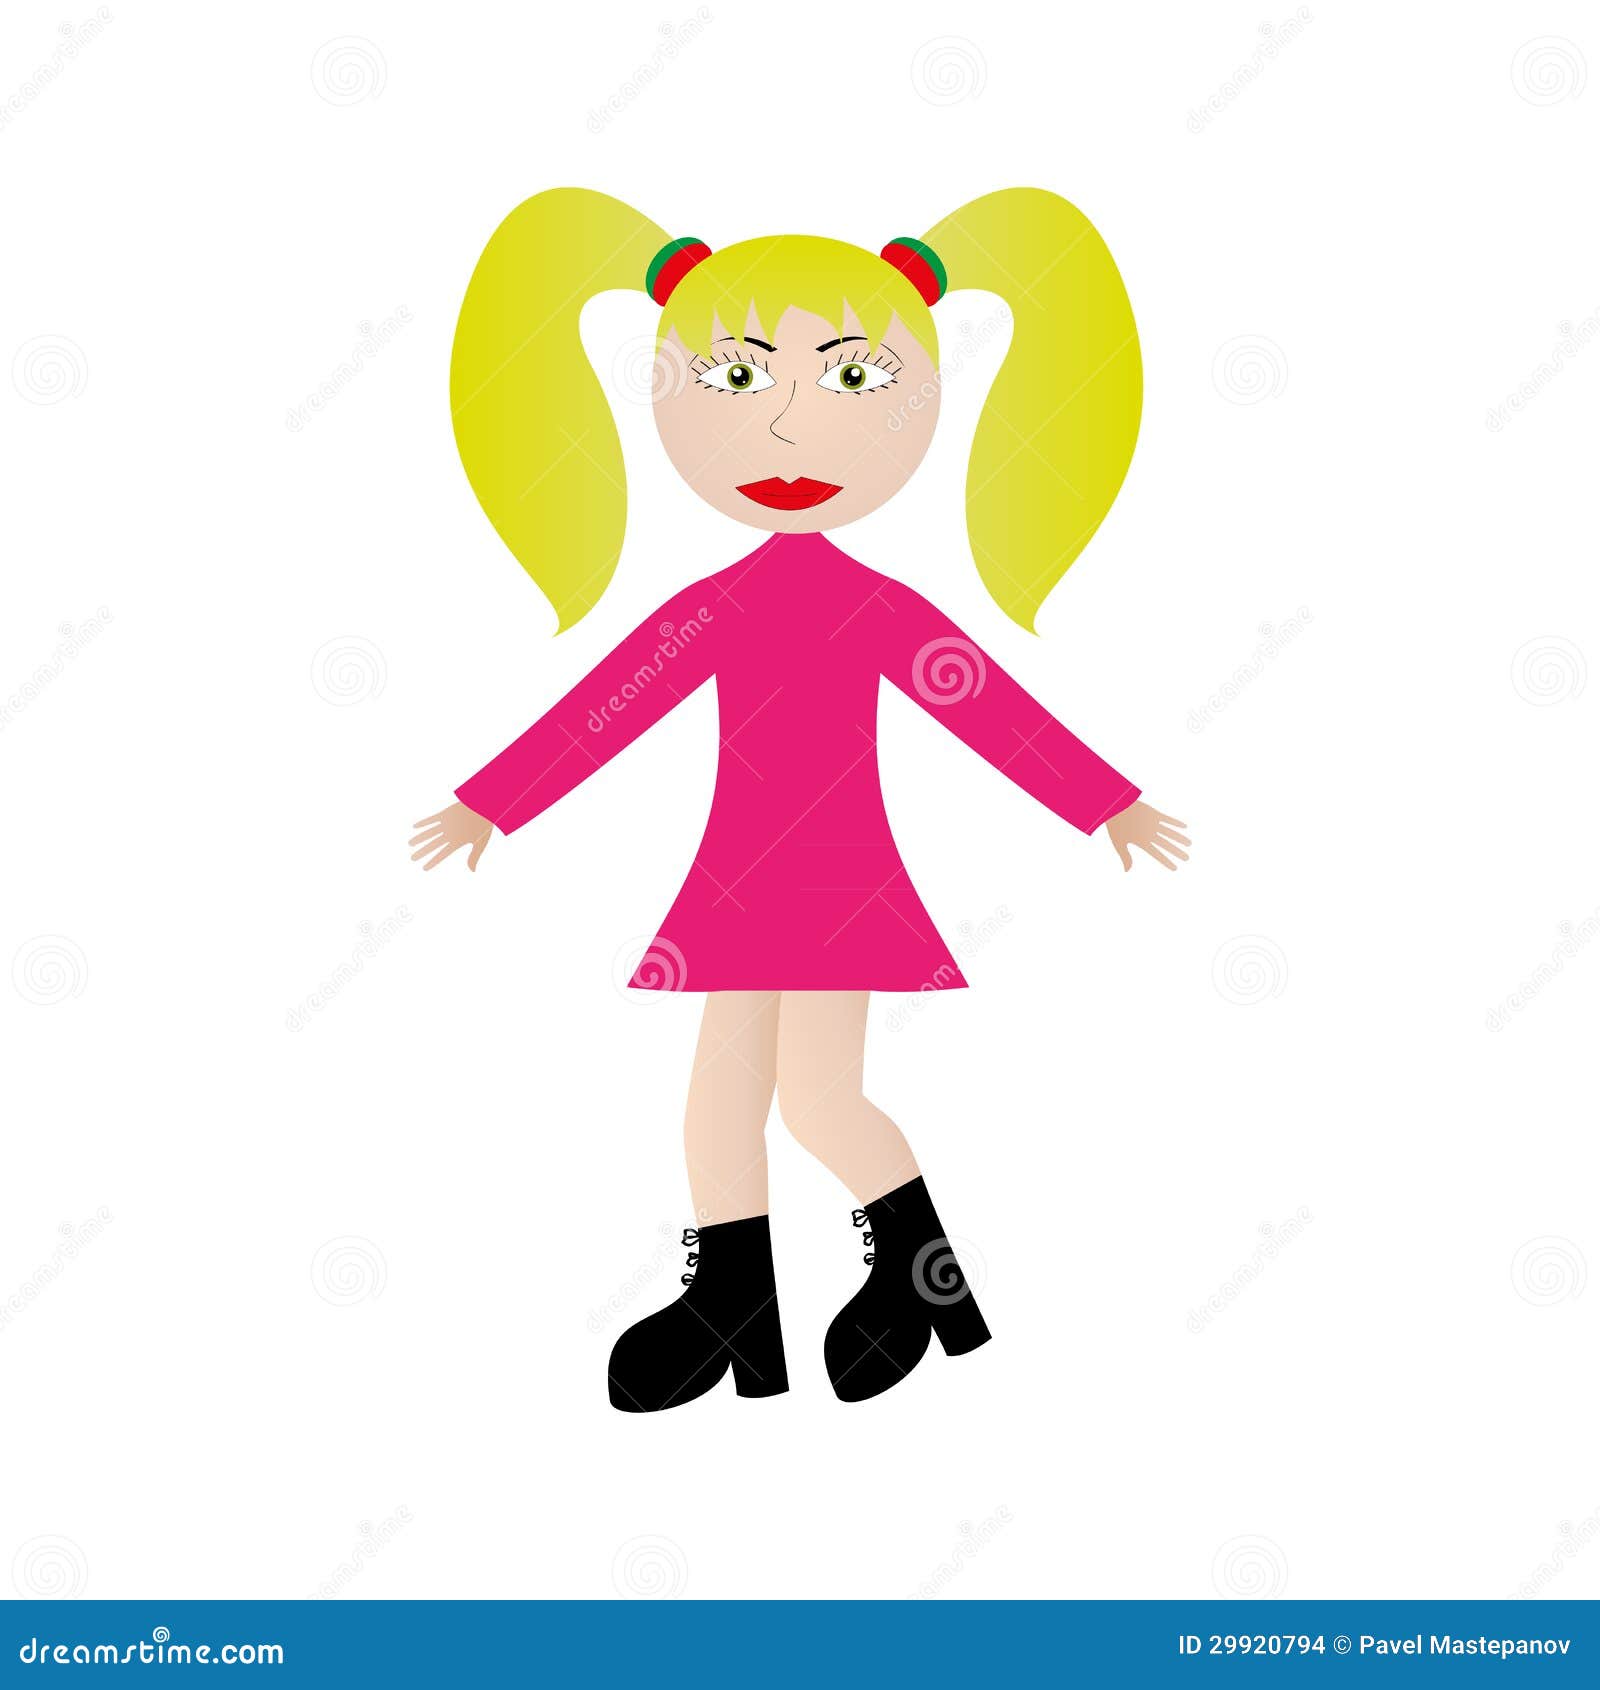 Blonde girl stock vector. Illustration of golden, pink - 29920794